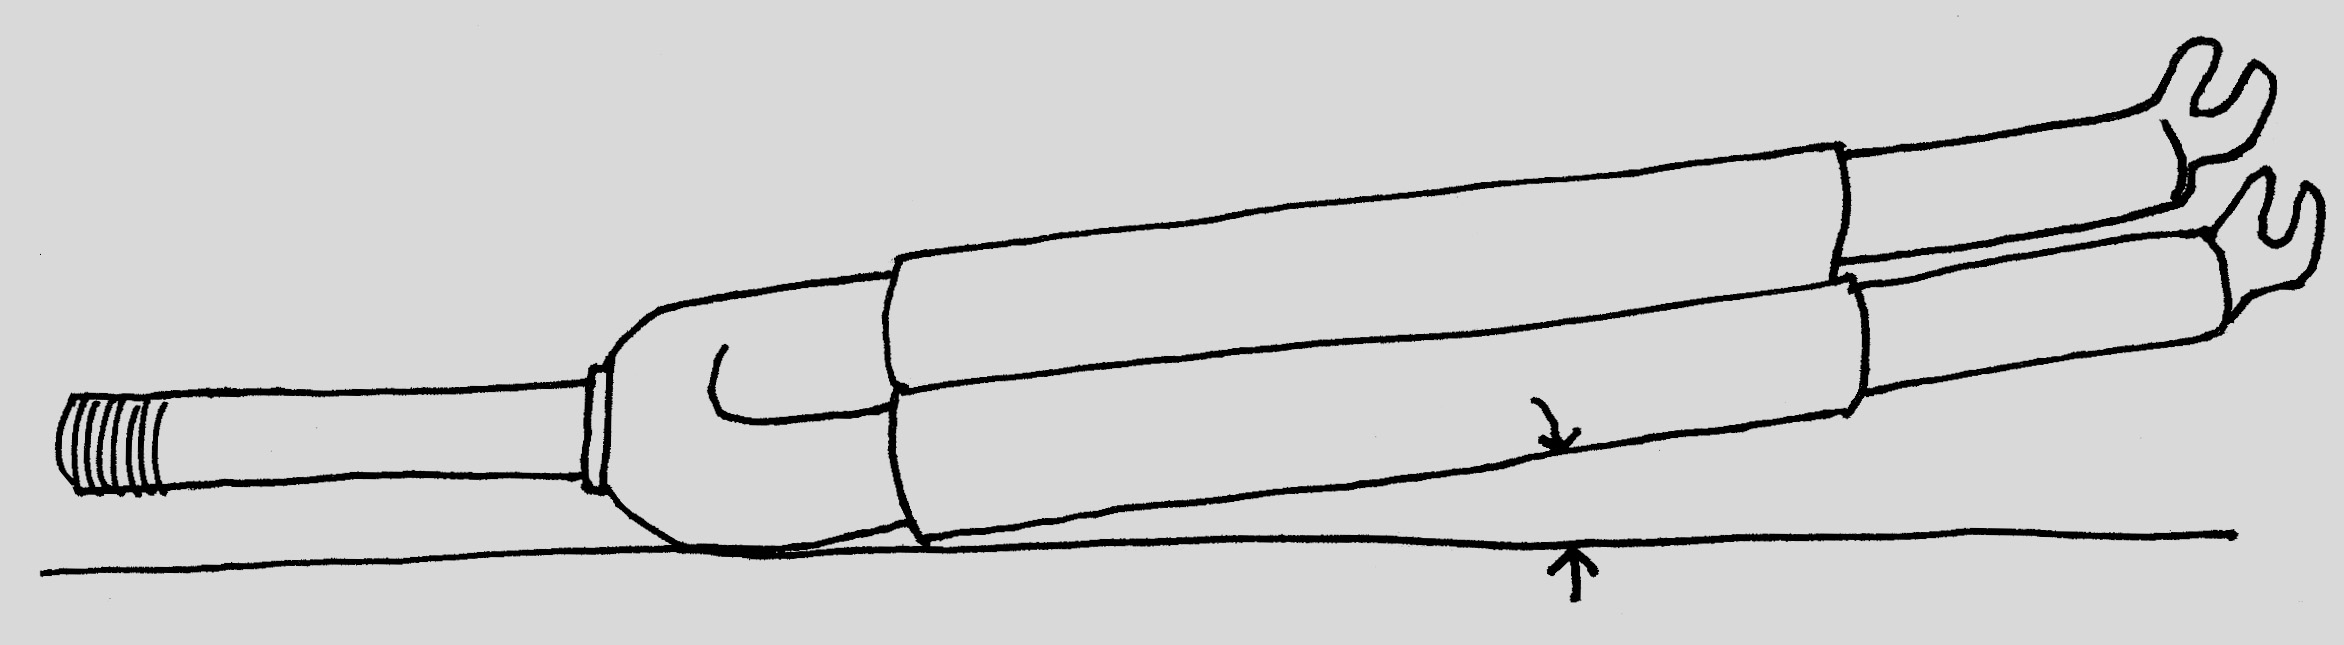 illustration showing a lengthened set of fork blades pointing forward